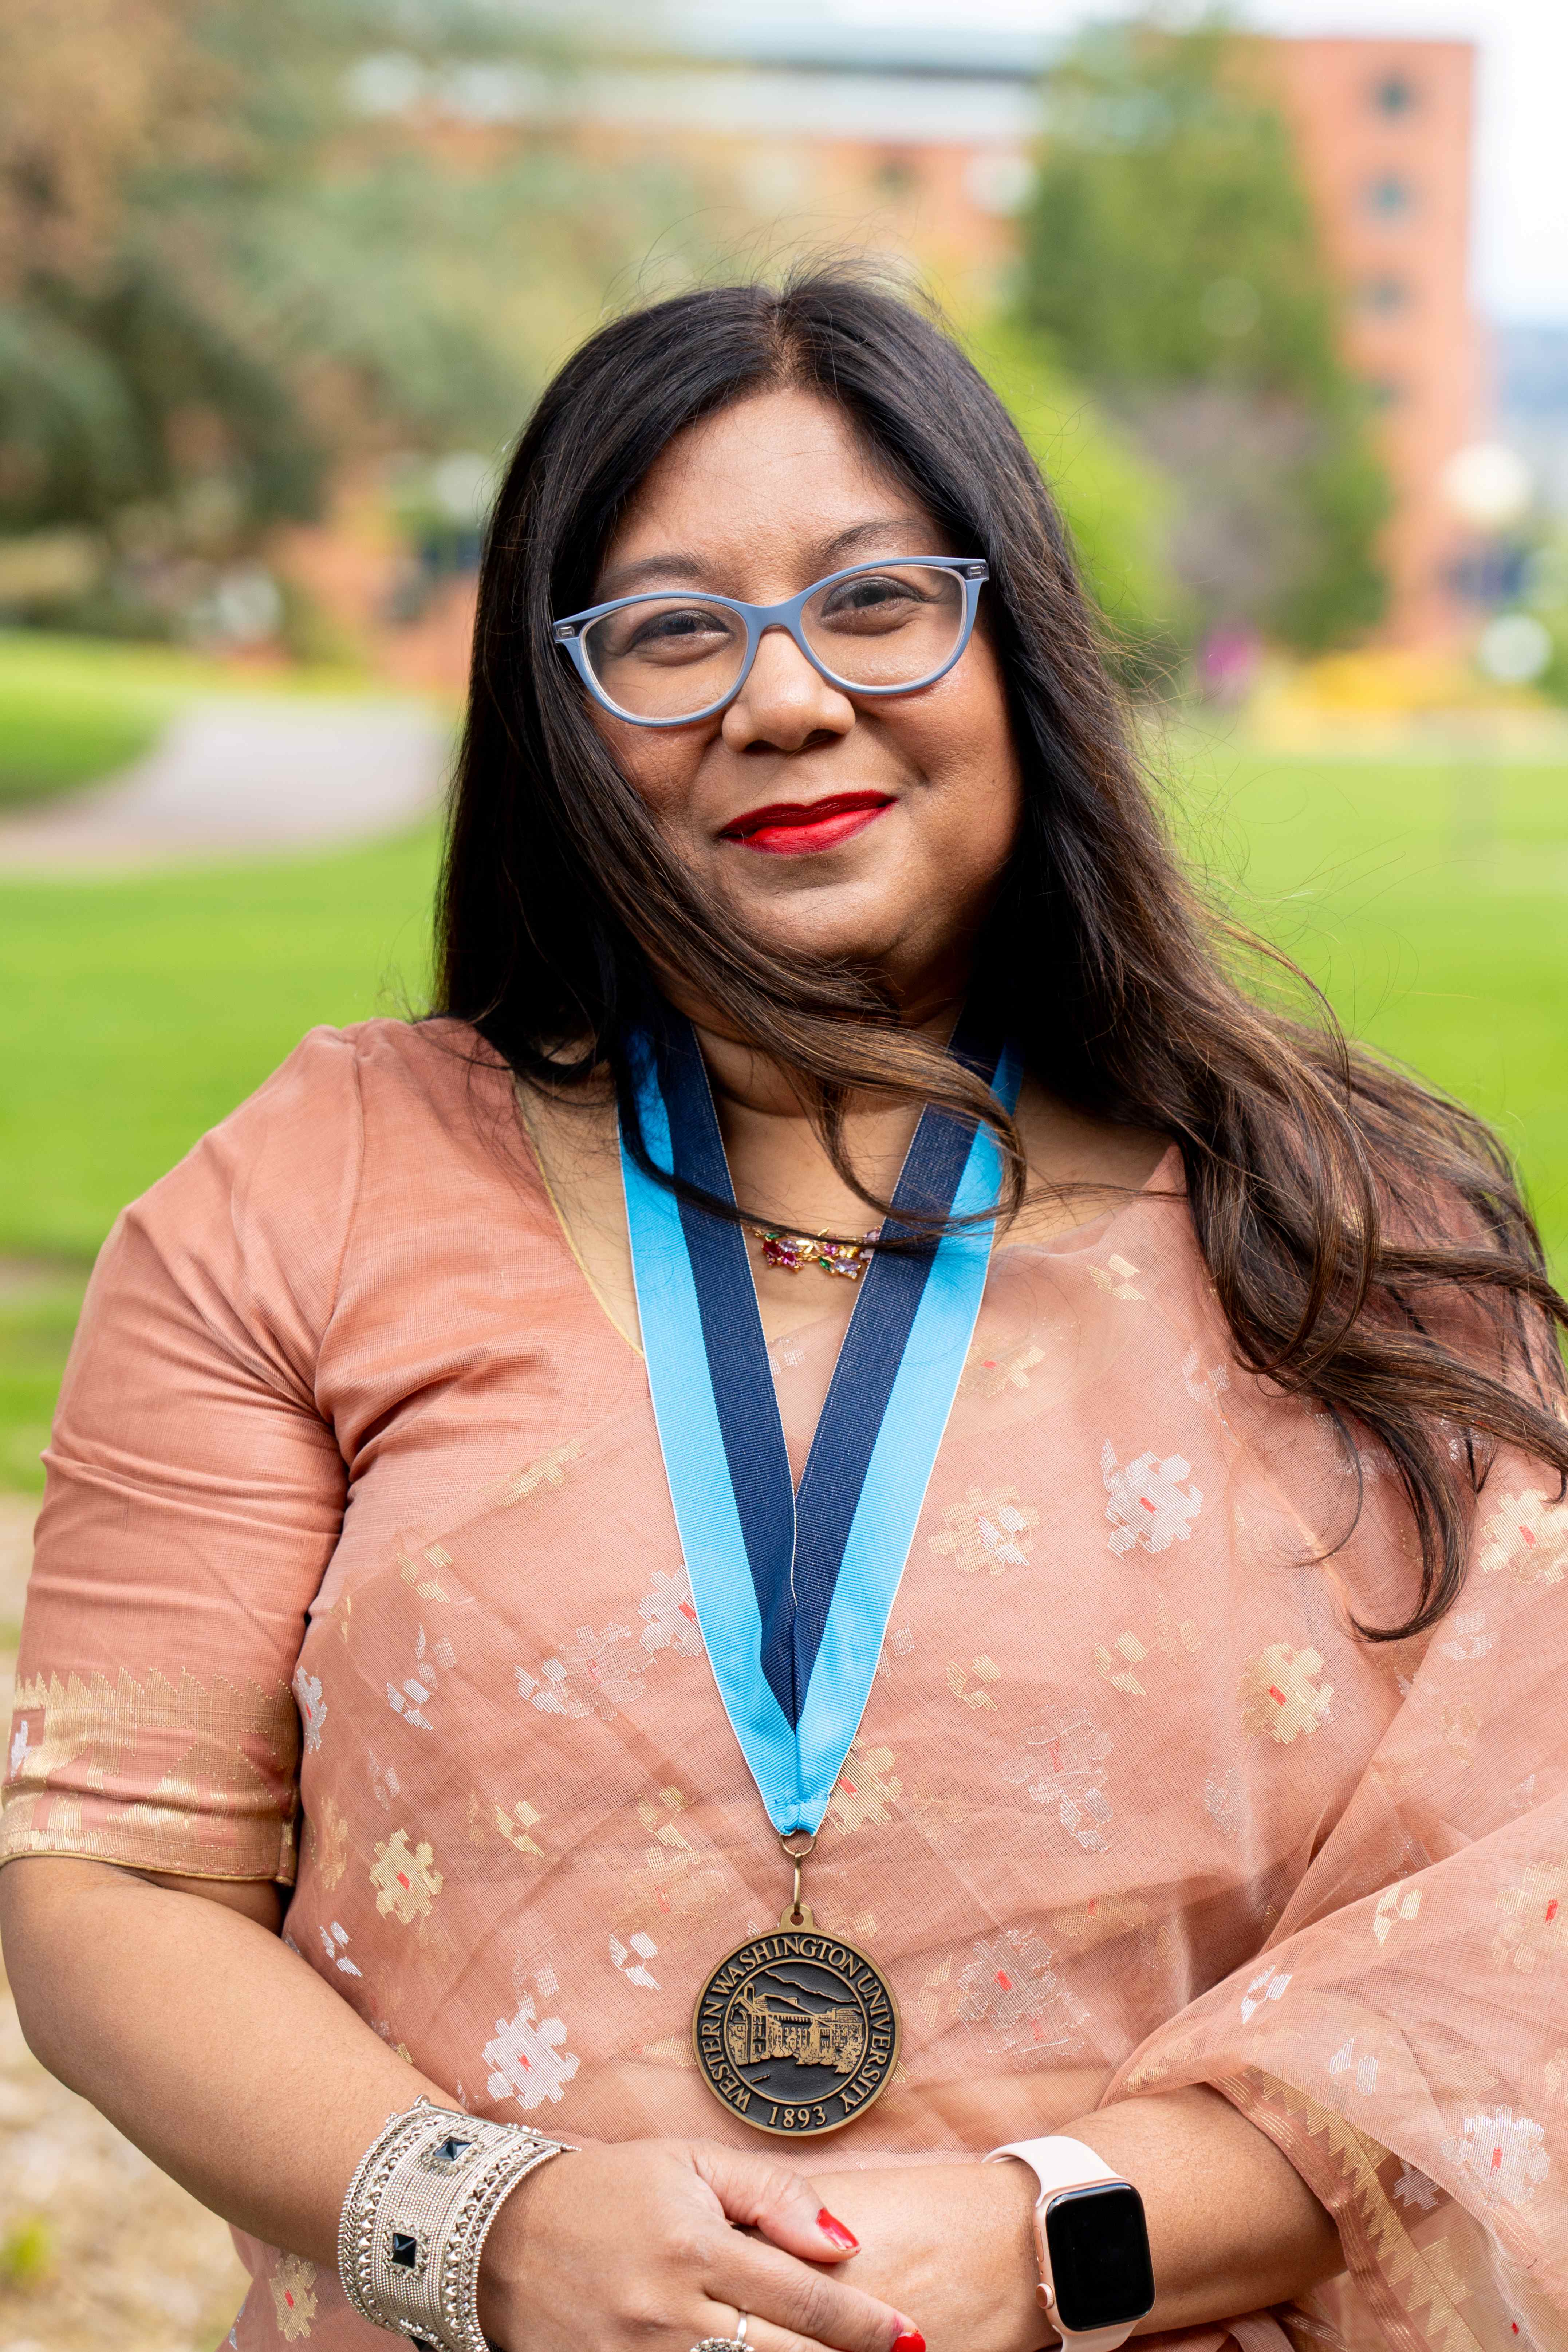 Dr. Moushumi Sharmin wearing a beautiful saree dress and the WWU award medallion